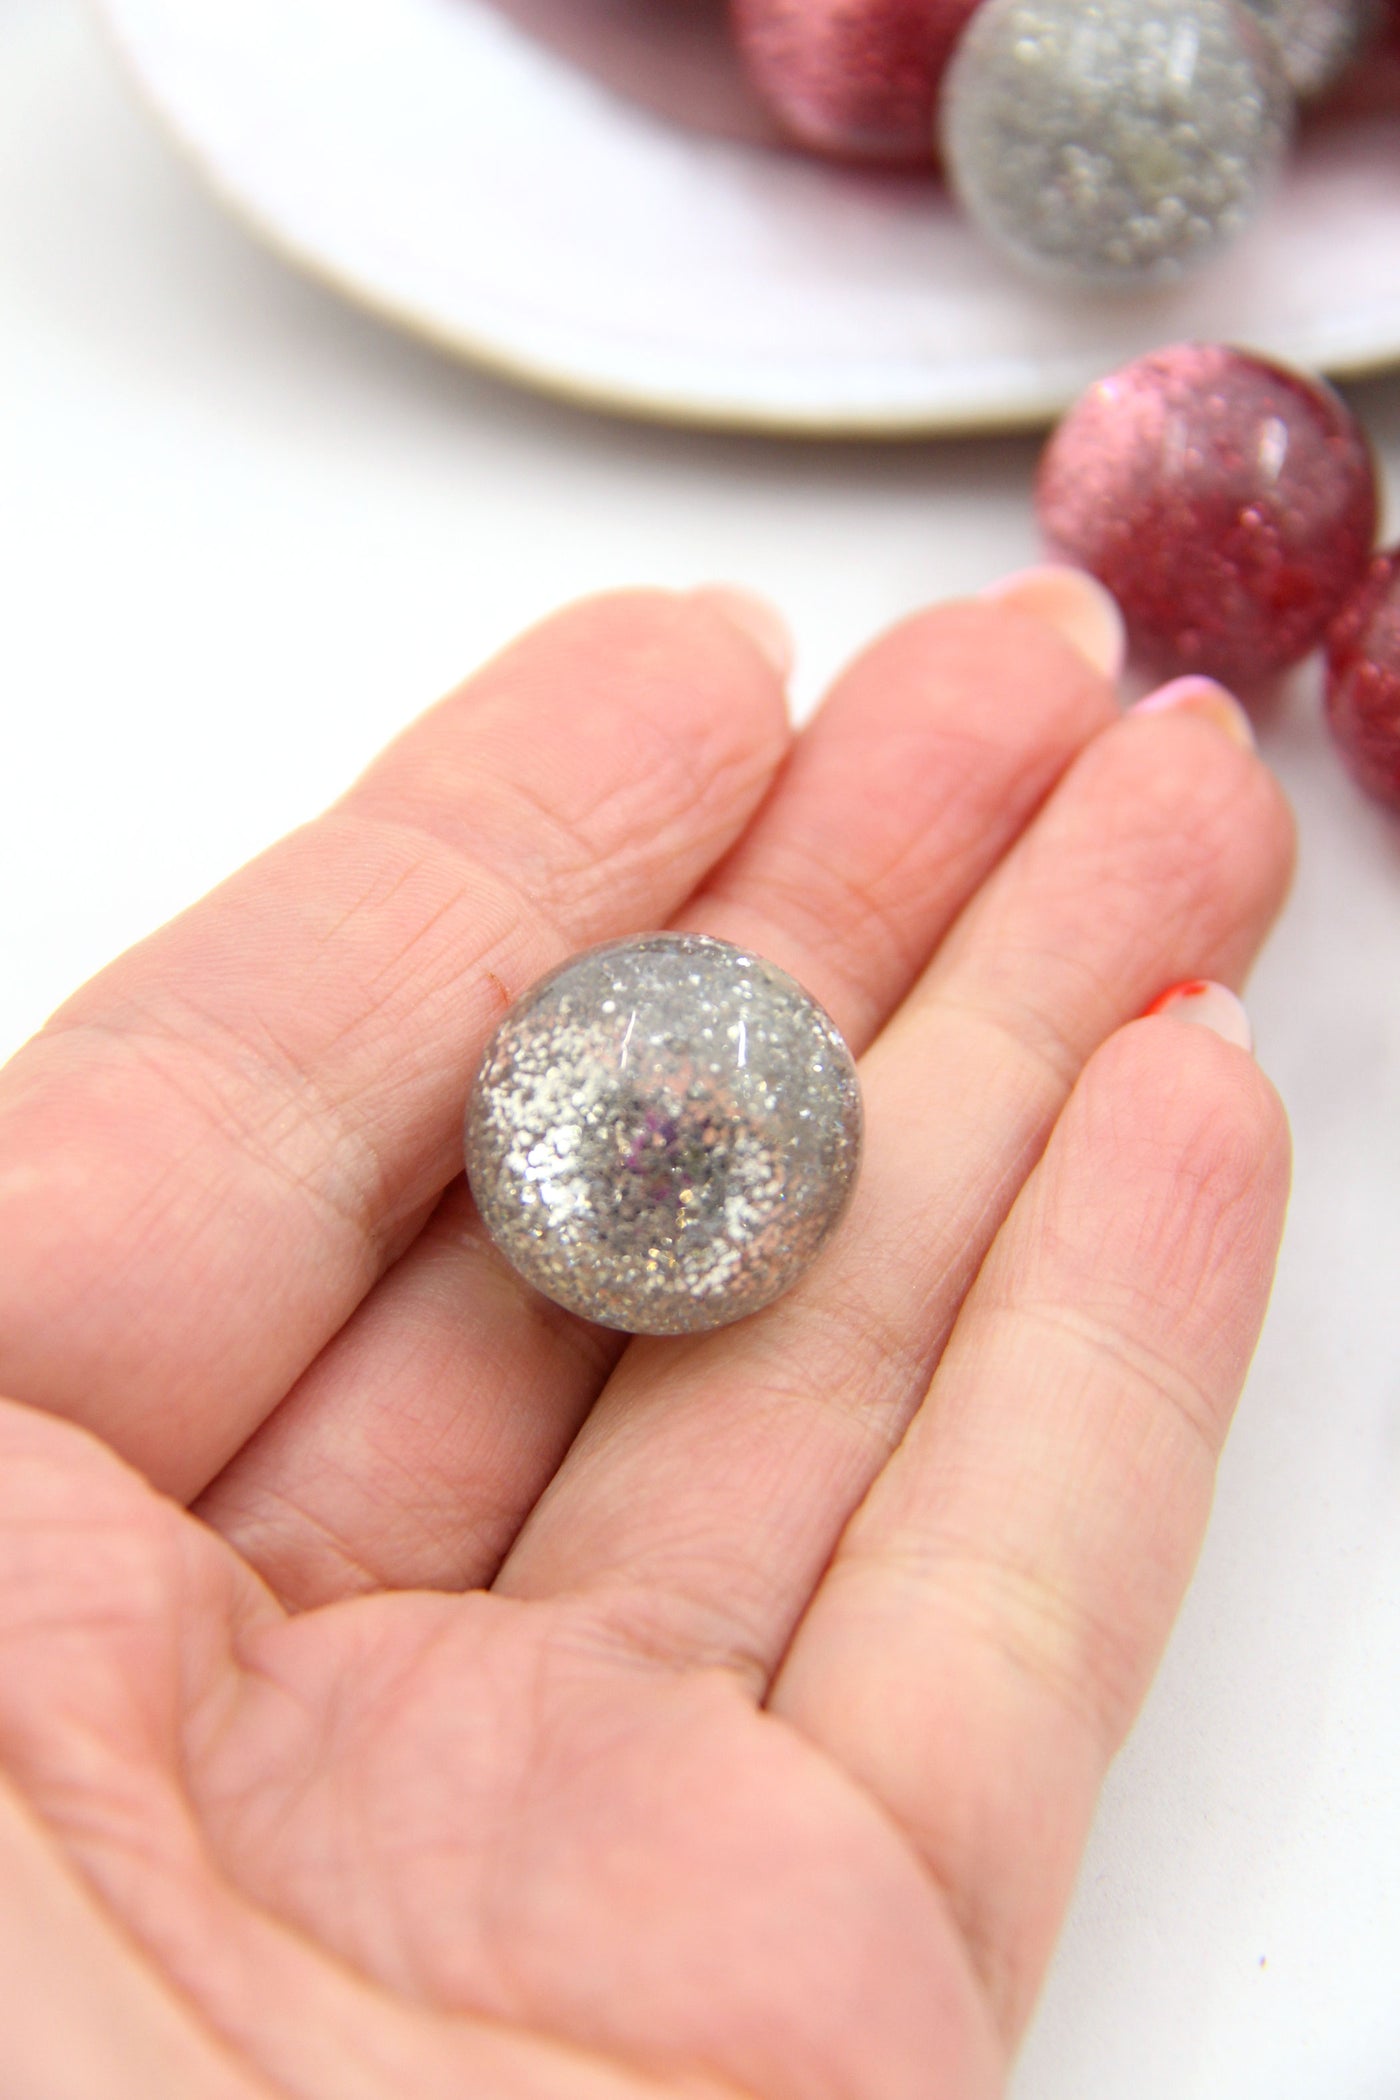 Glittery Round Italian Resin Beads, 20mm, 1 Focal Bead